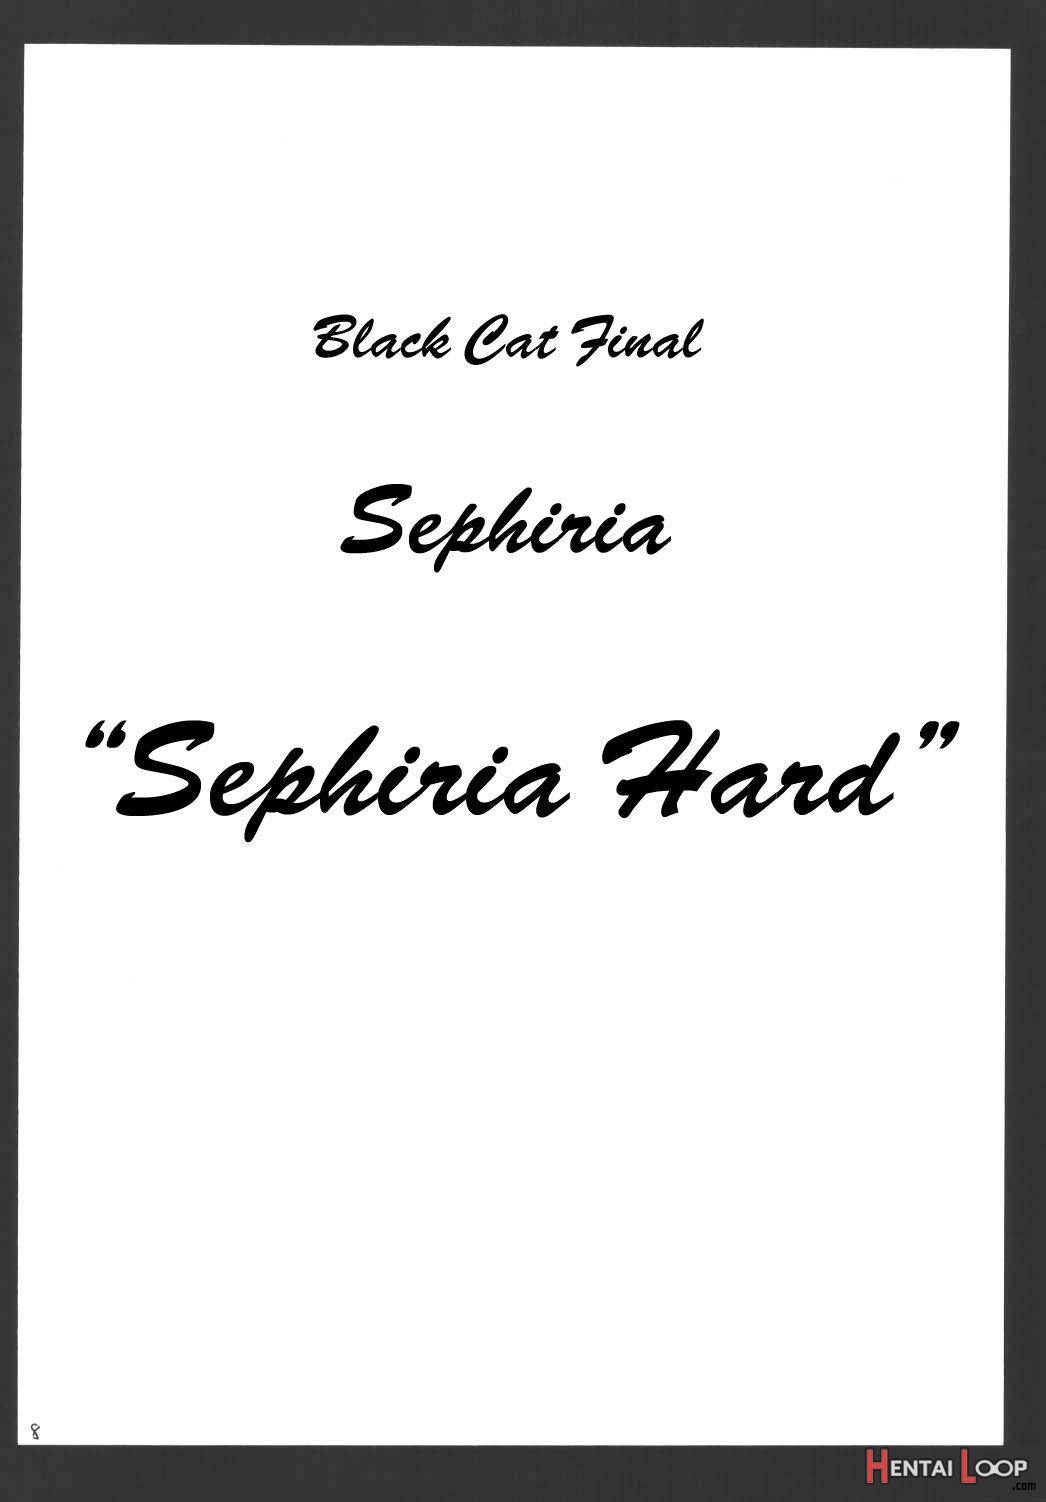 Black Cat Final page 6